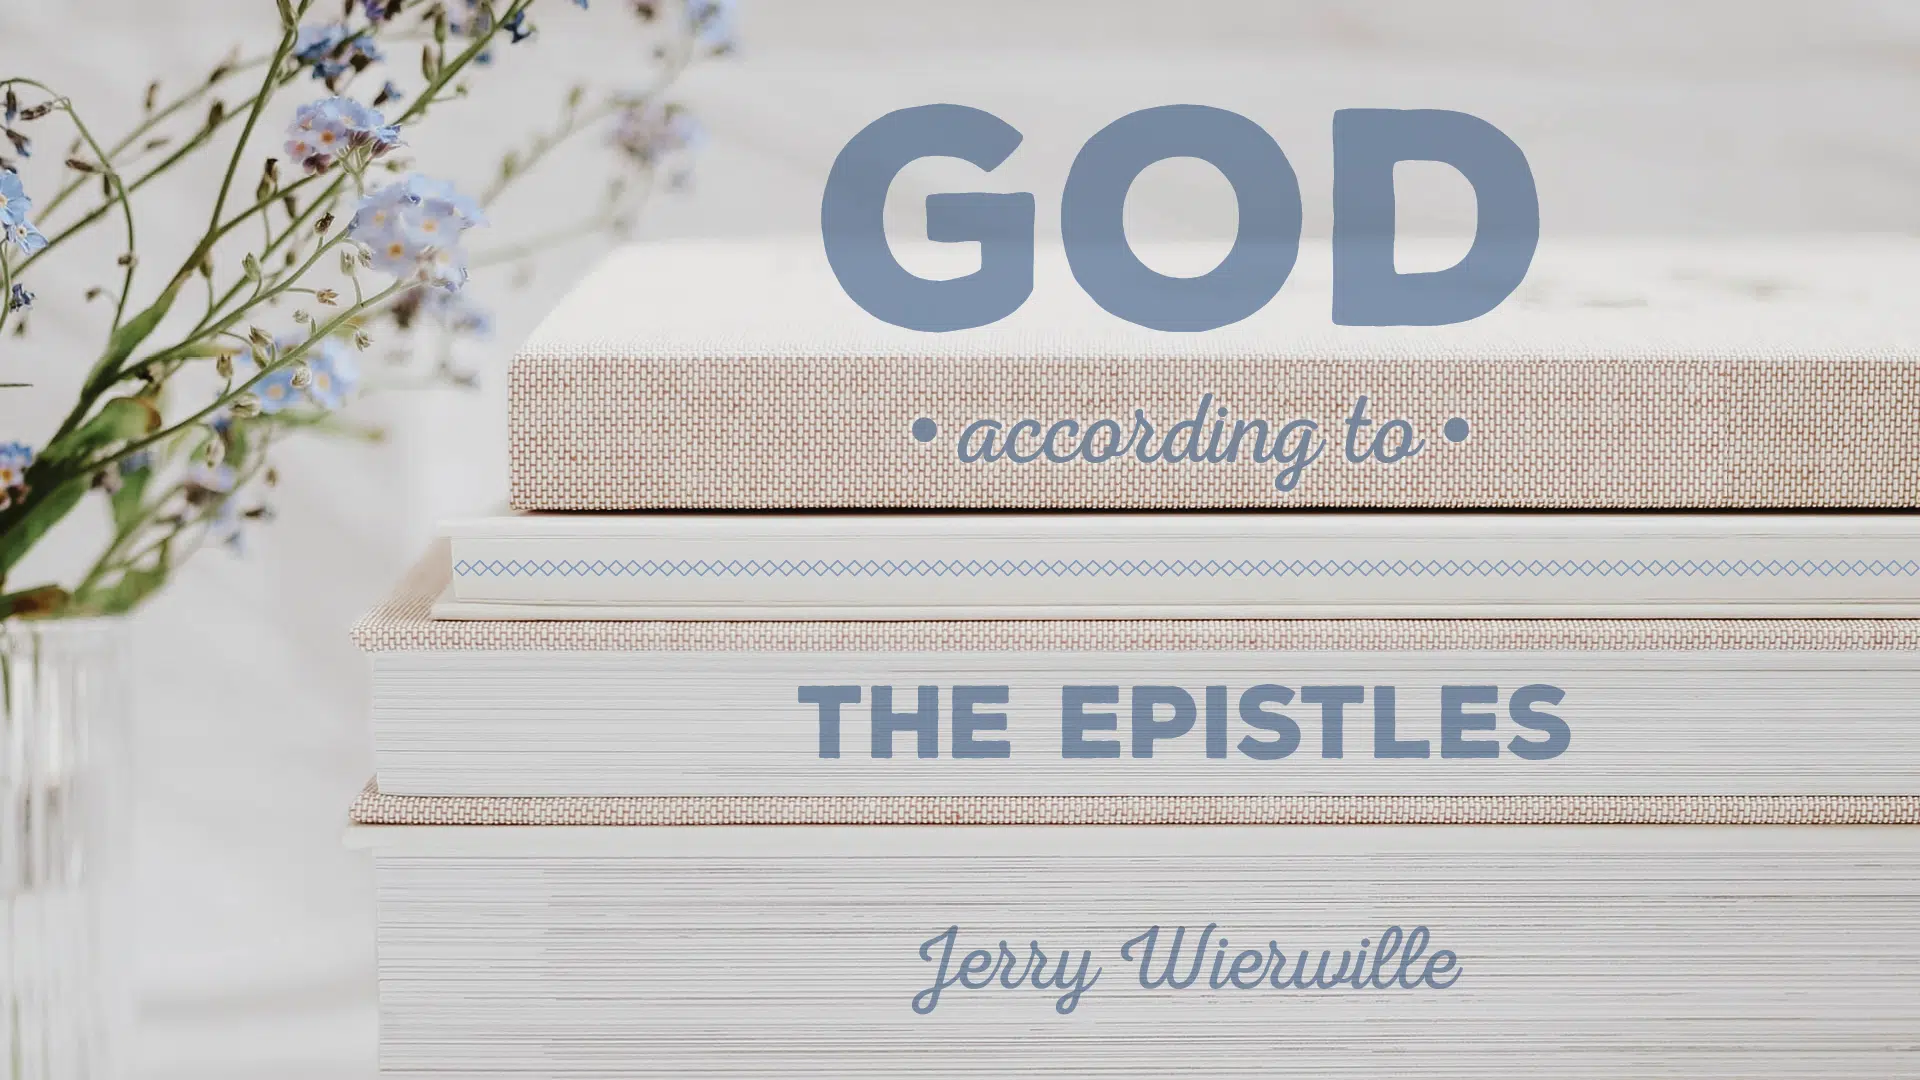 God According to the Epistles